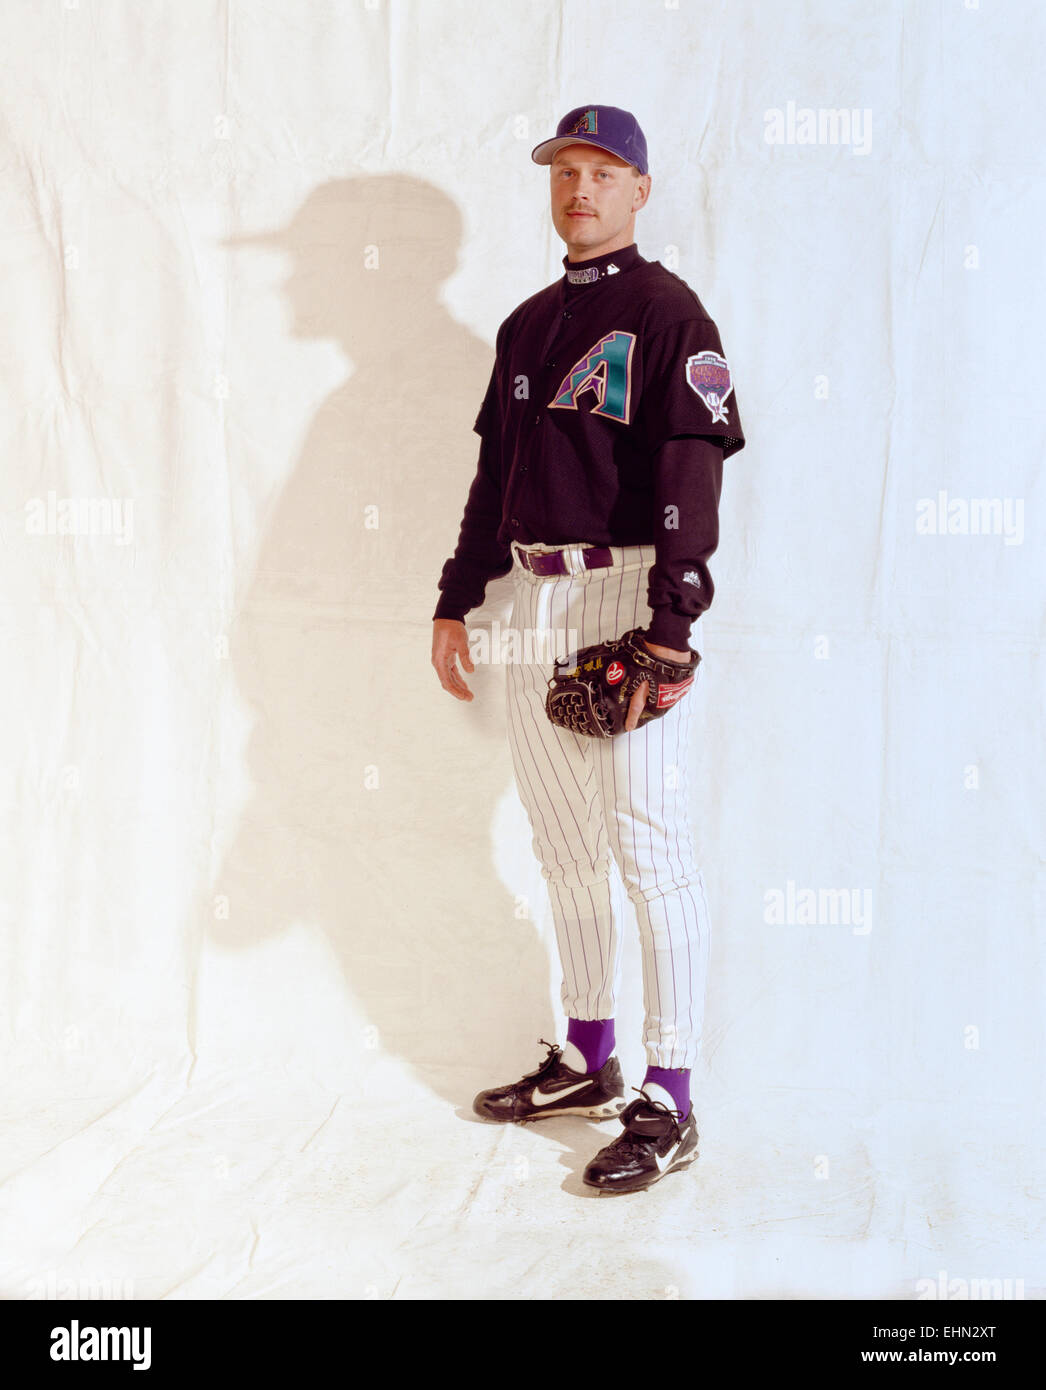 Phoenix, AZ - 28. März: Baseballspieler willie Blair in Phoenix, Arizona am 28. März 1998. Stockfoto